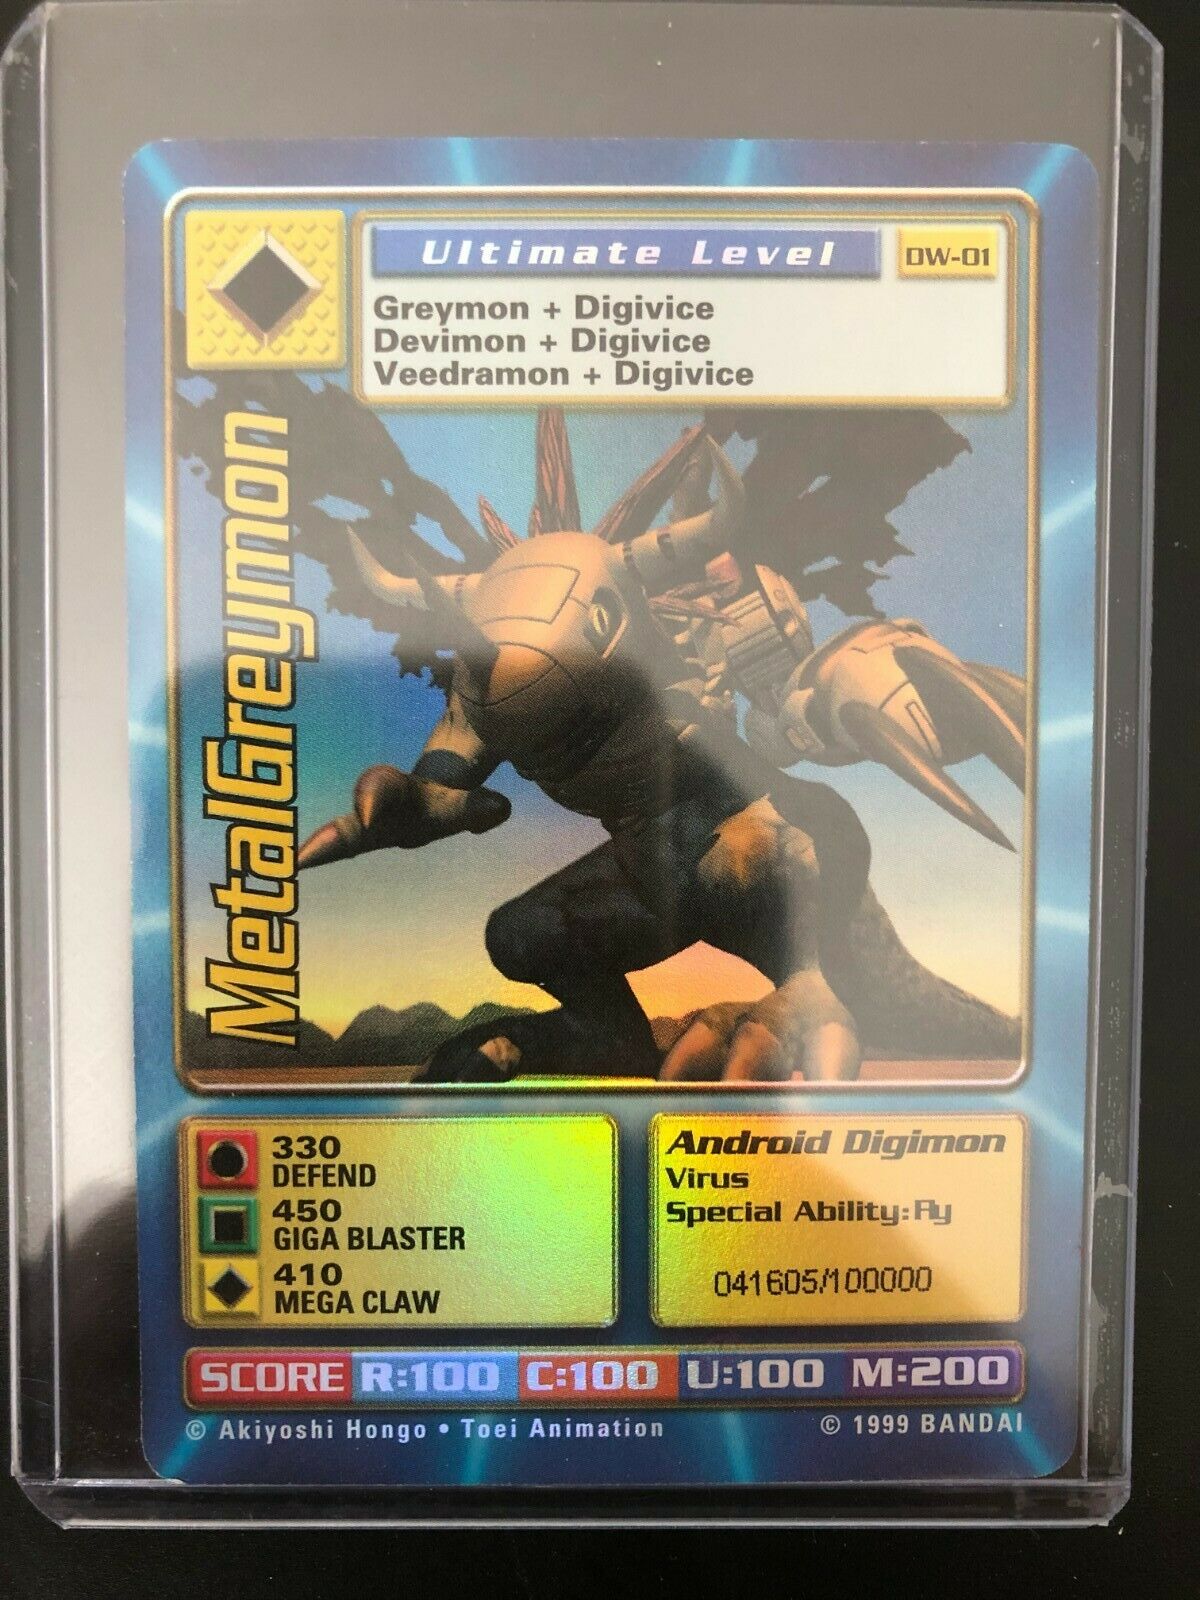 Digimon World PlayStation Promo DW-01 MetalGreymon - number 041605 / 100,000